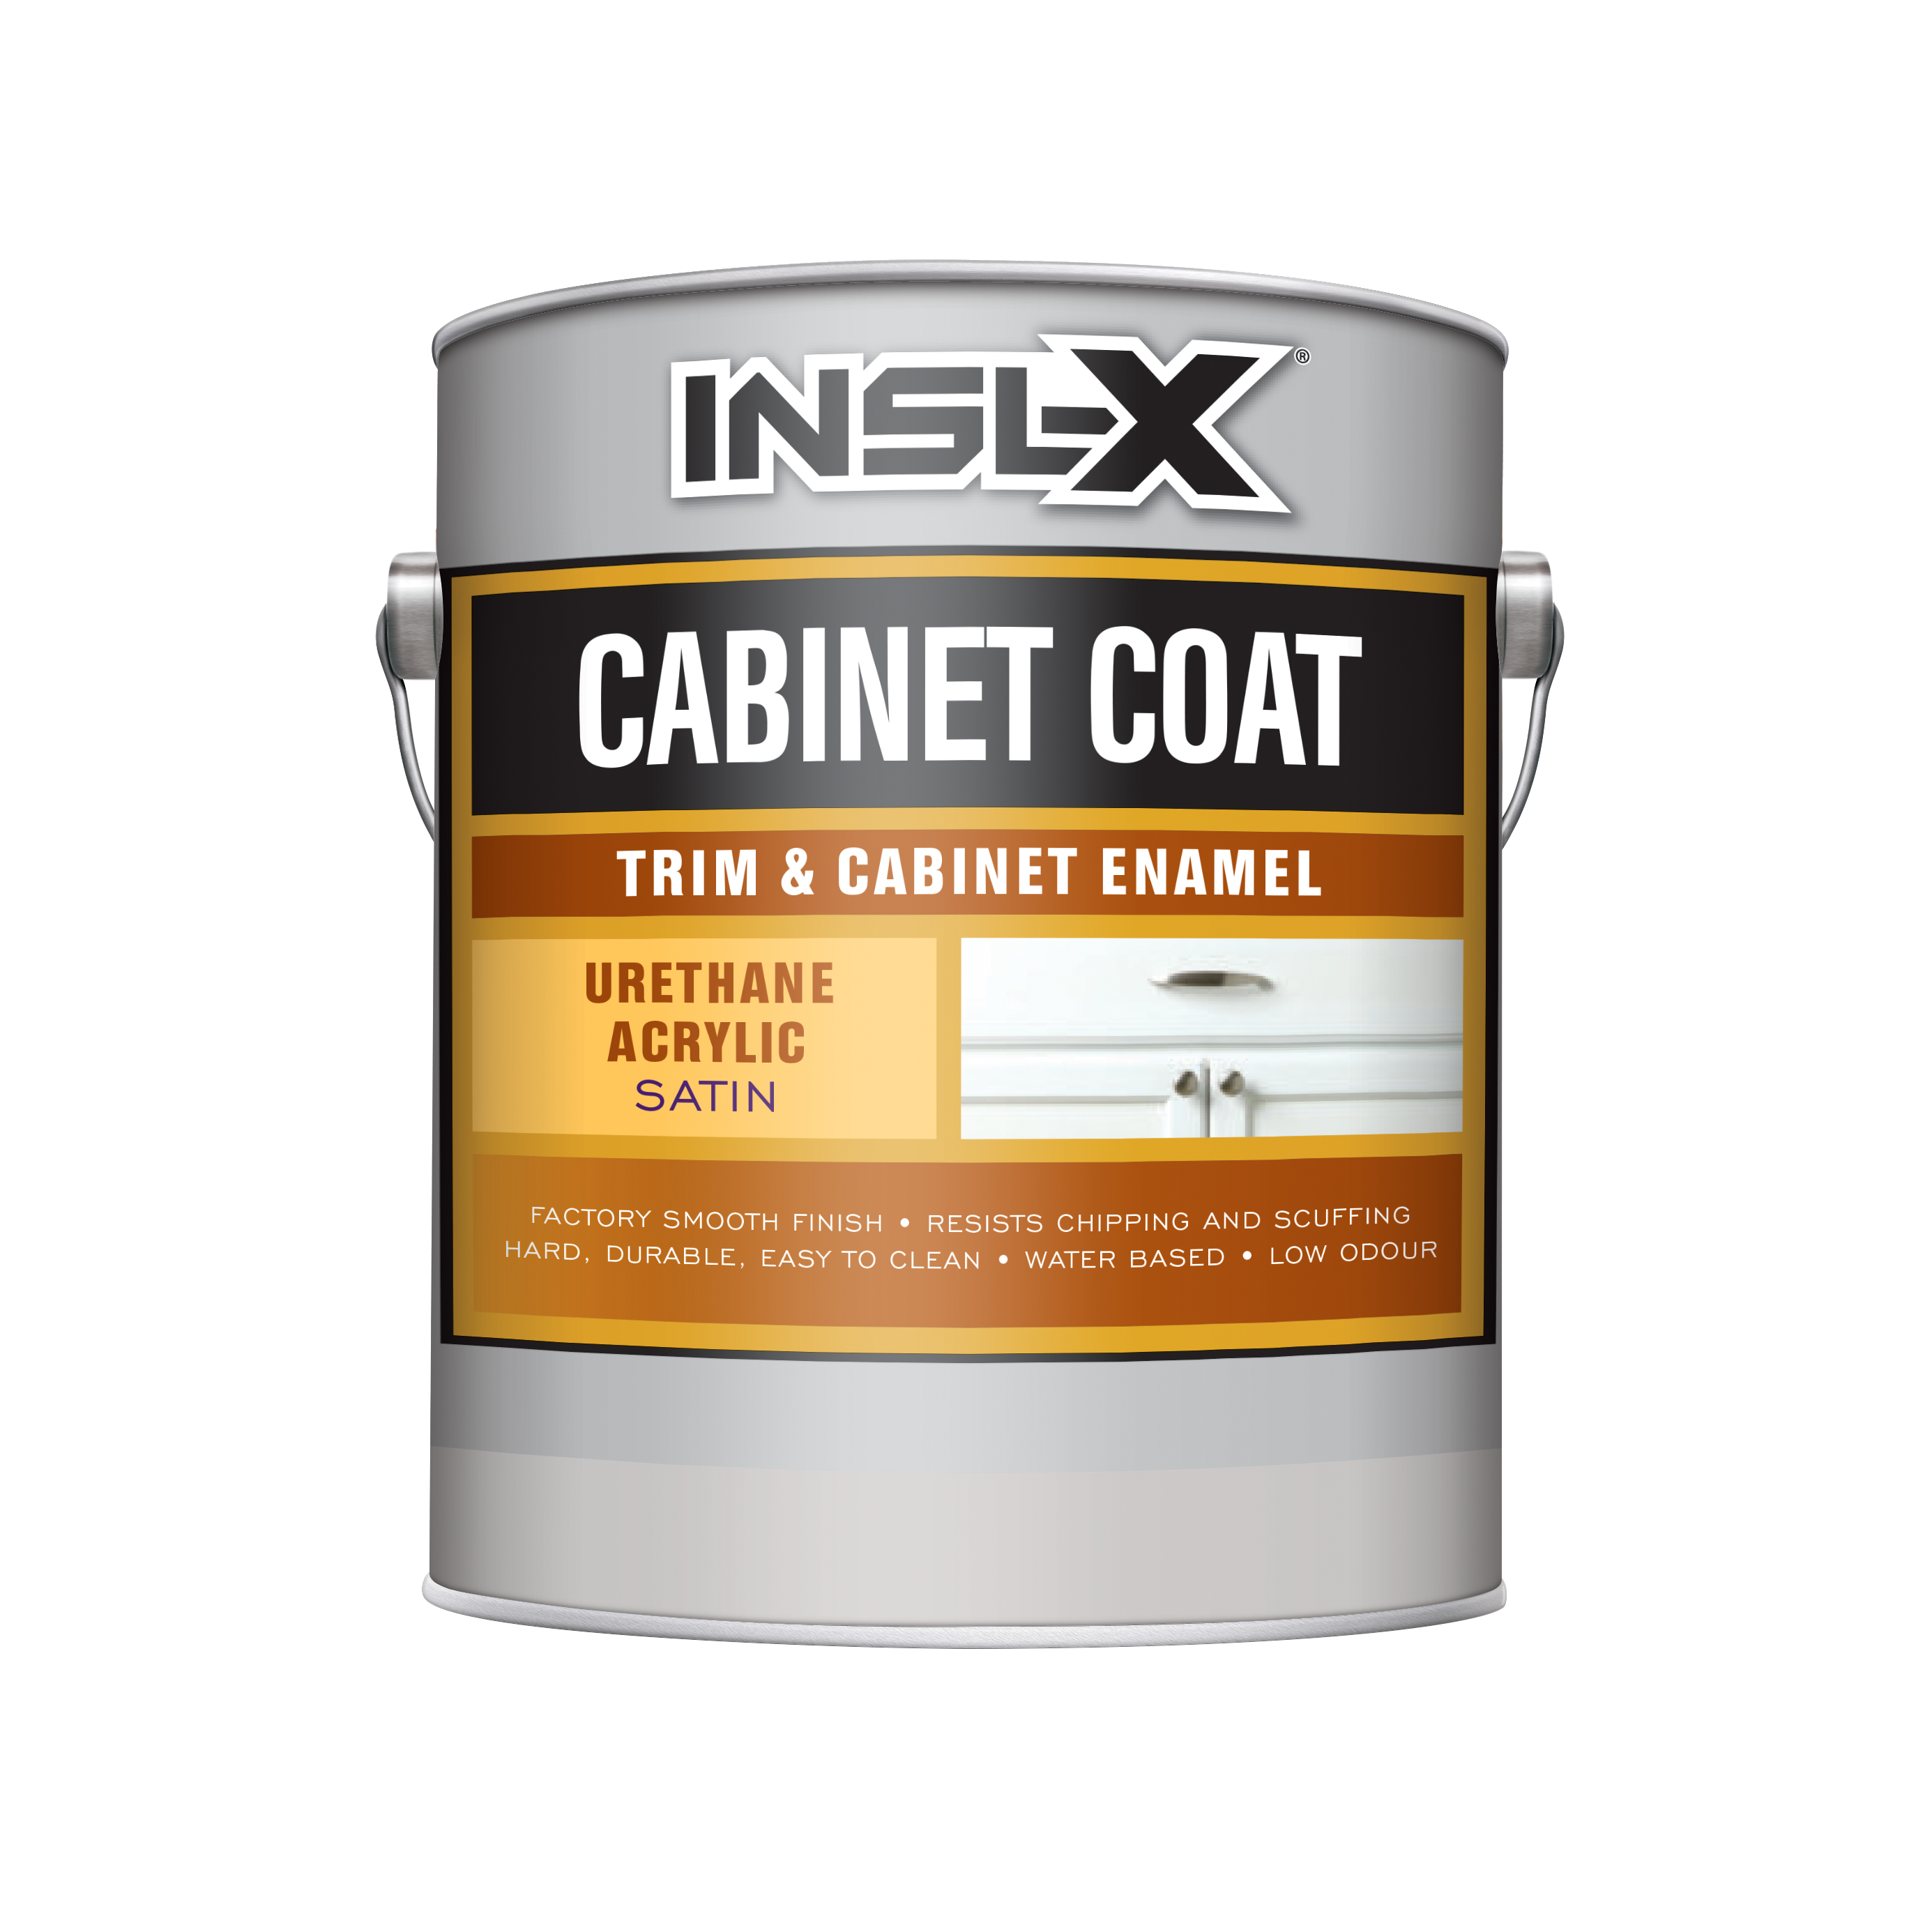 INSL-X Cabinet Coat - Urethane Acrylic Satin Enamel Cabinet Paint - The Paint People